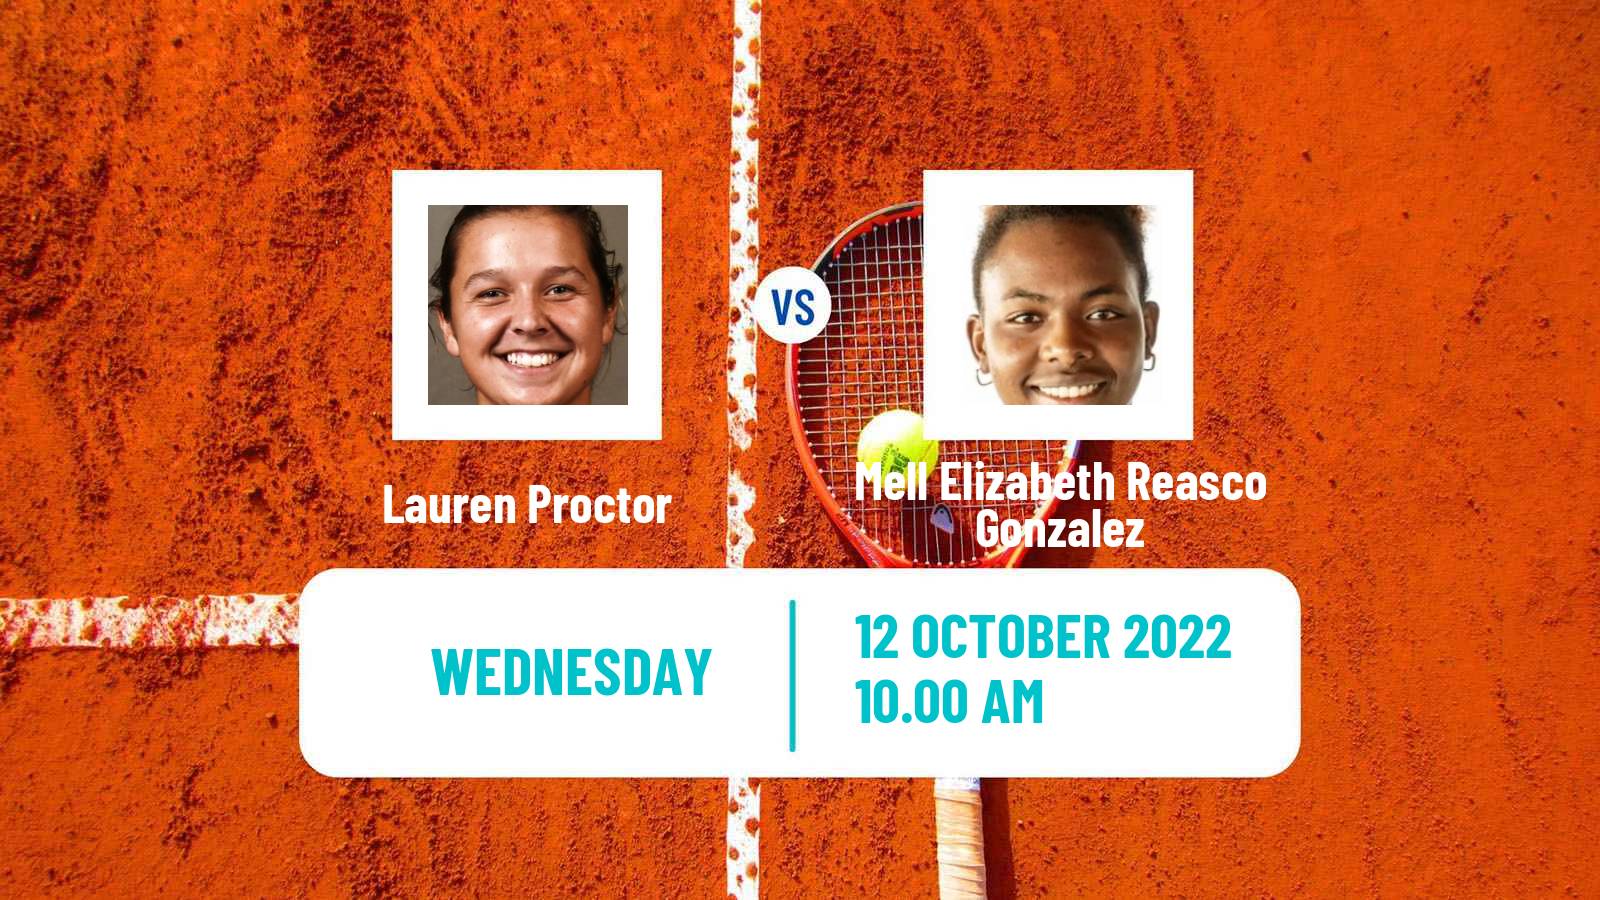 Tennis ITF Tournaments Lauren Proctor - Mell Elizabeth Reasco Gonzalez